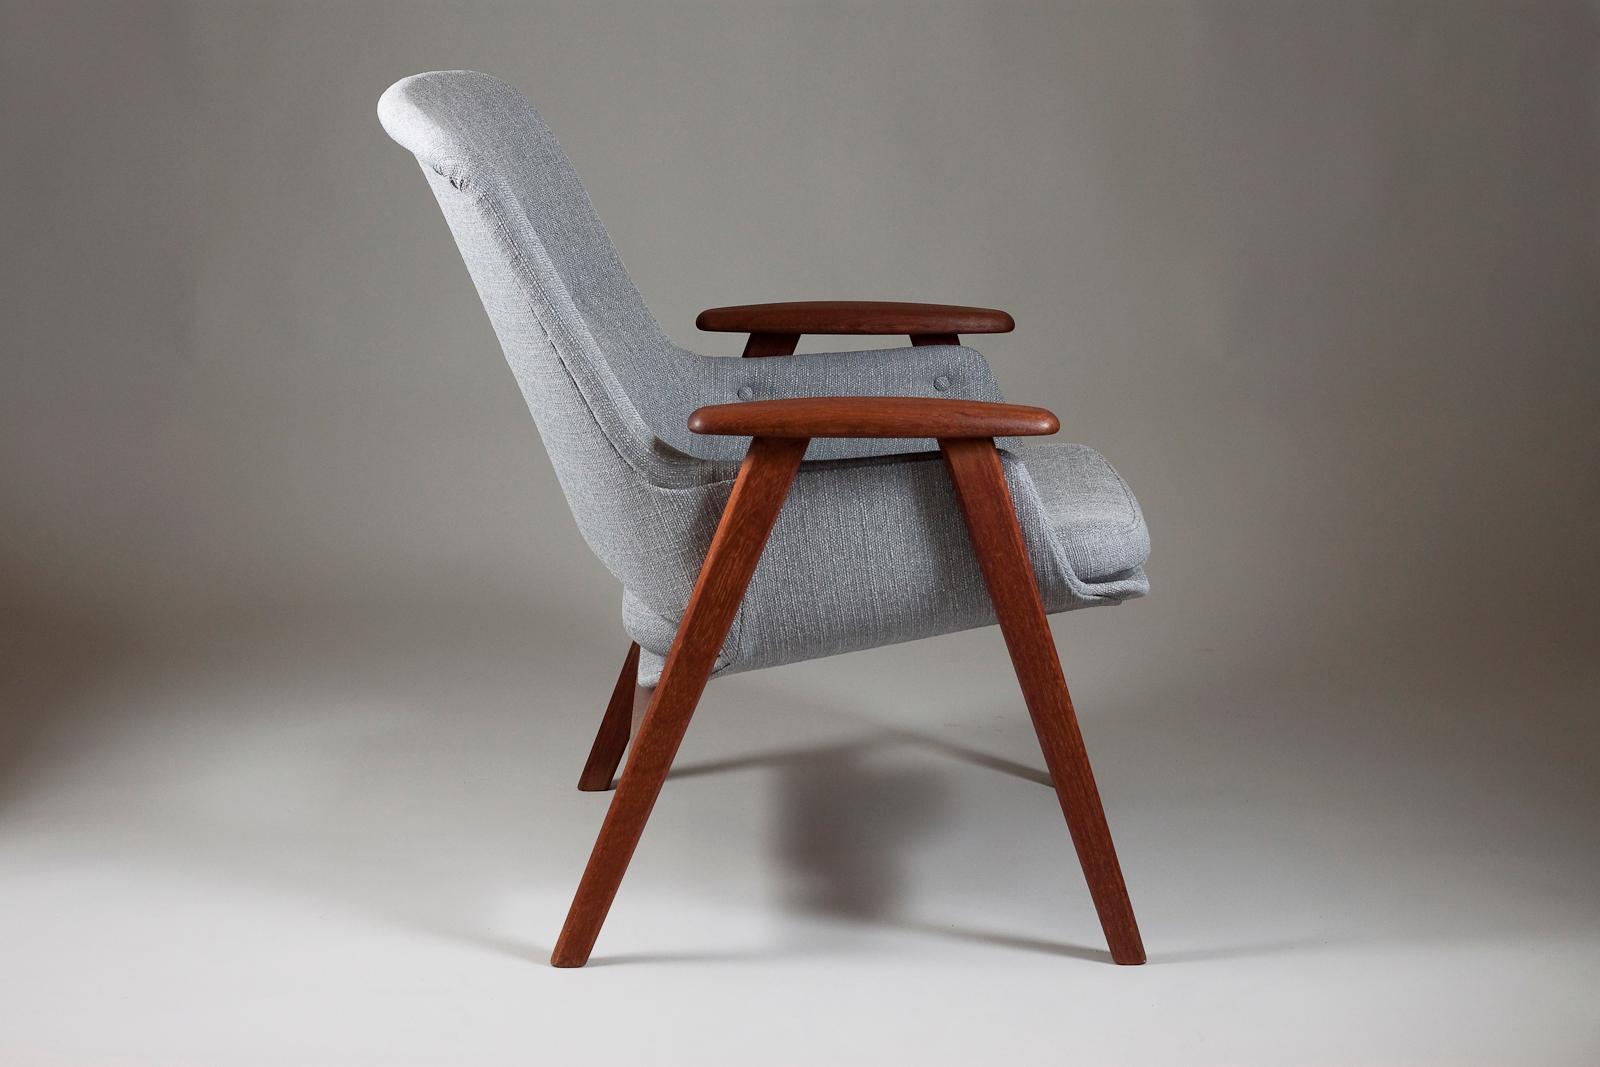 Beautiful Finnish Mid-Century Modern teak wood frame armchair in gray upholstery designed by Olof Ottelin for Stockmann Oy.